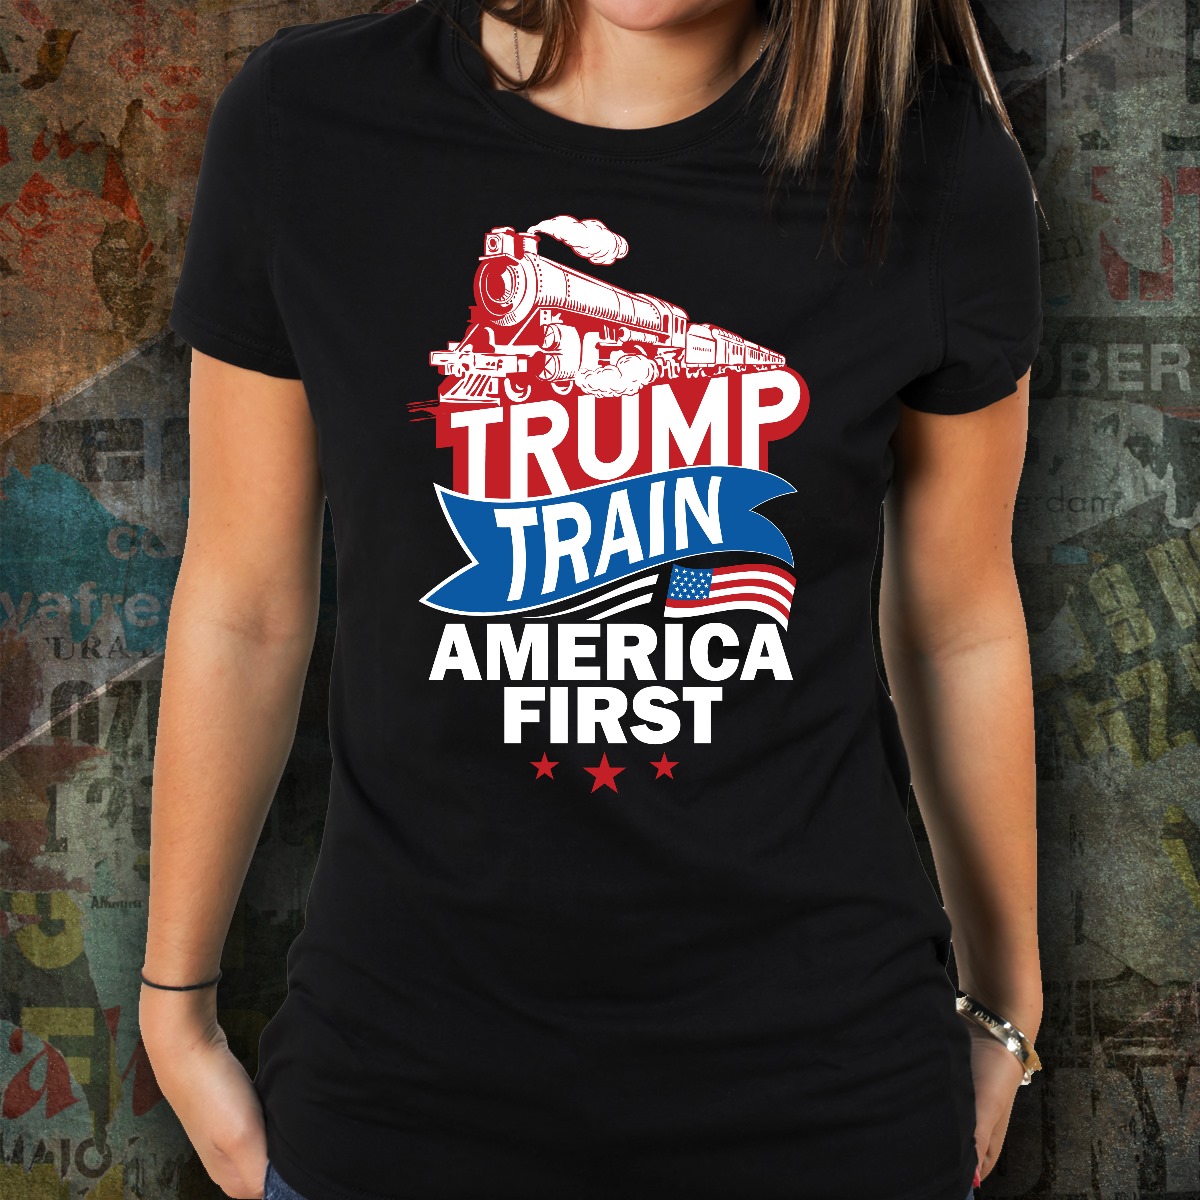 Trump train America first - America president Shirt, Hoodie, Sweatshirt ...